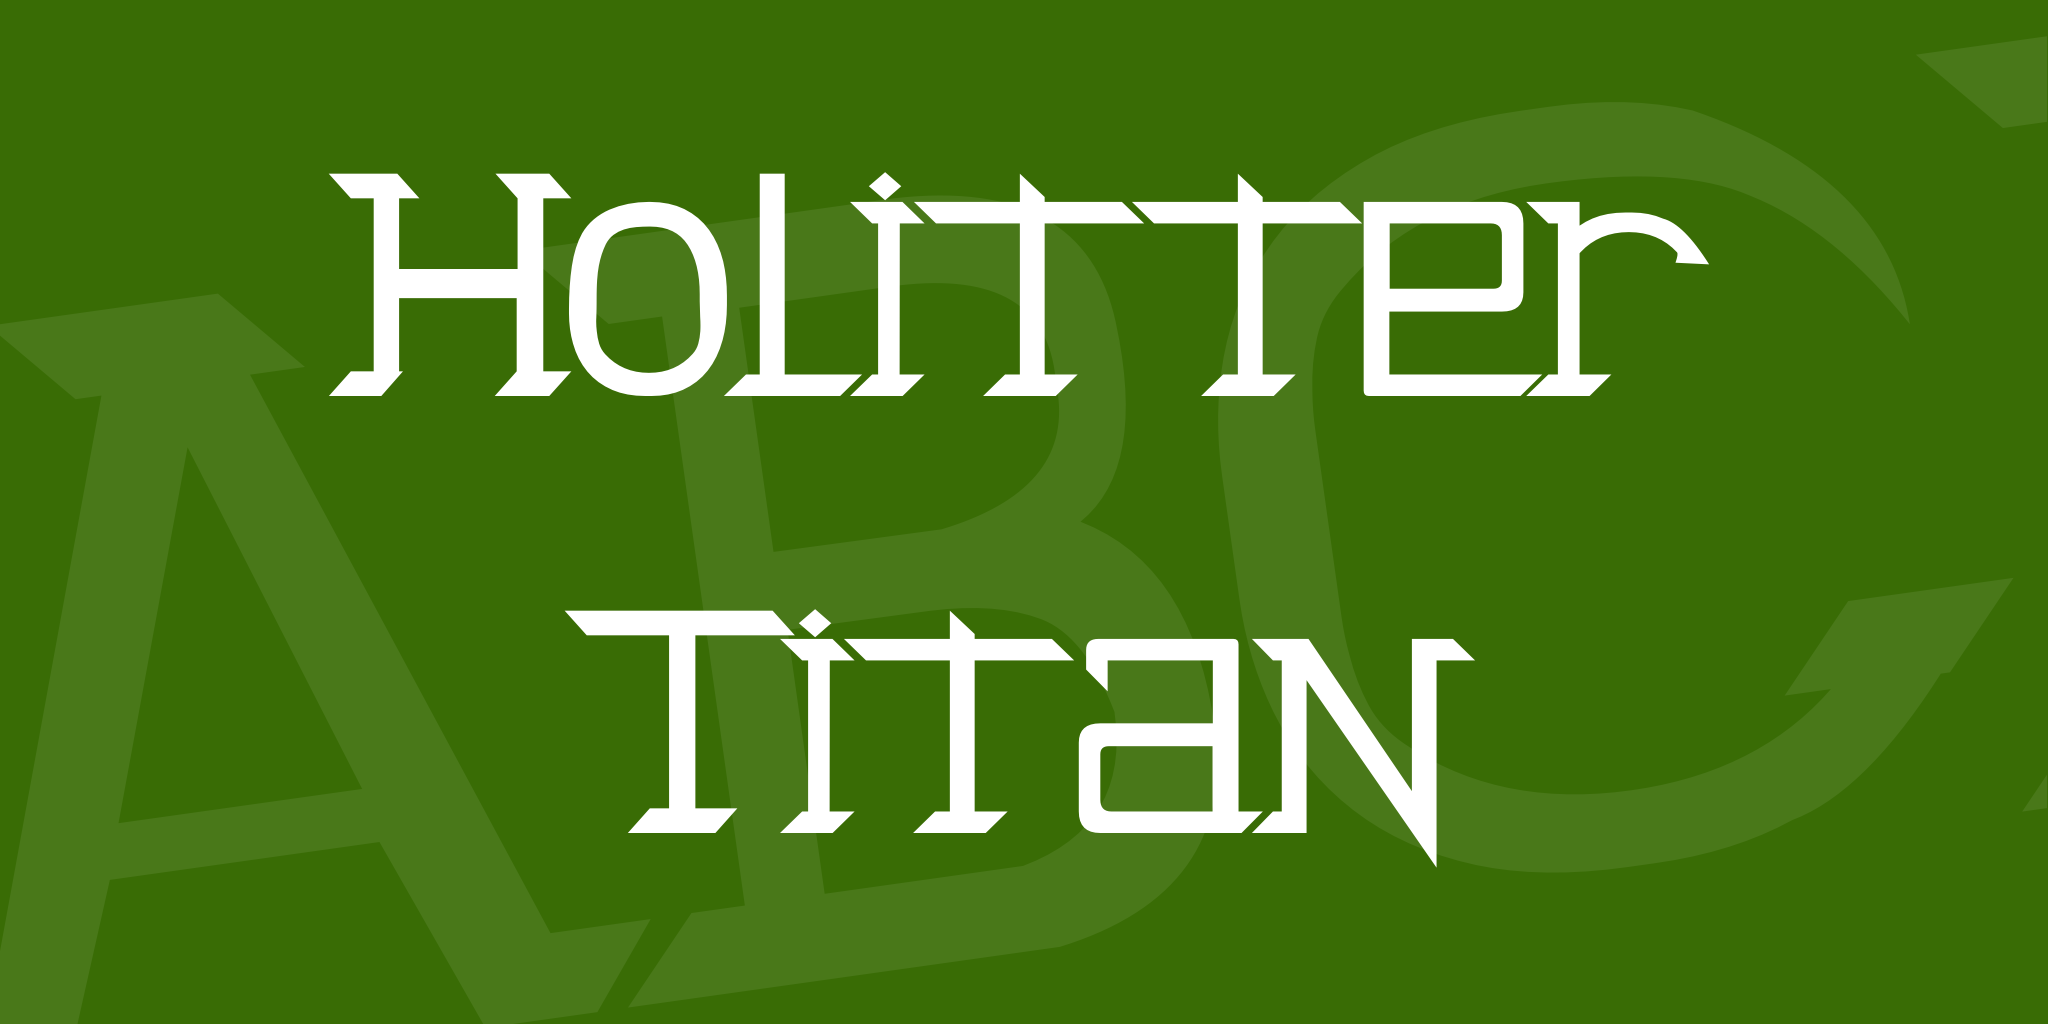 Holitter Titan